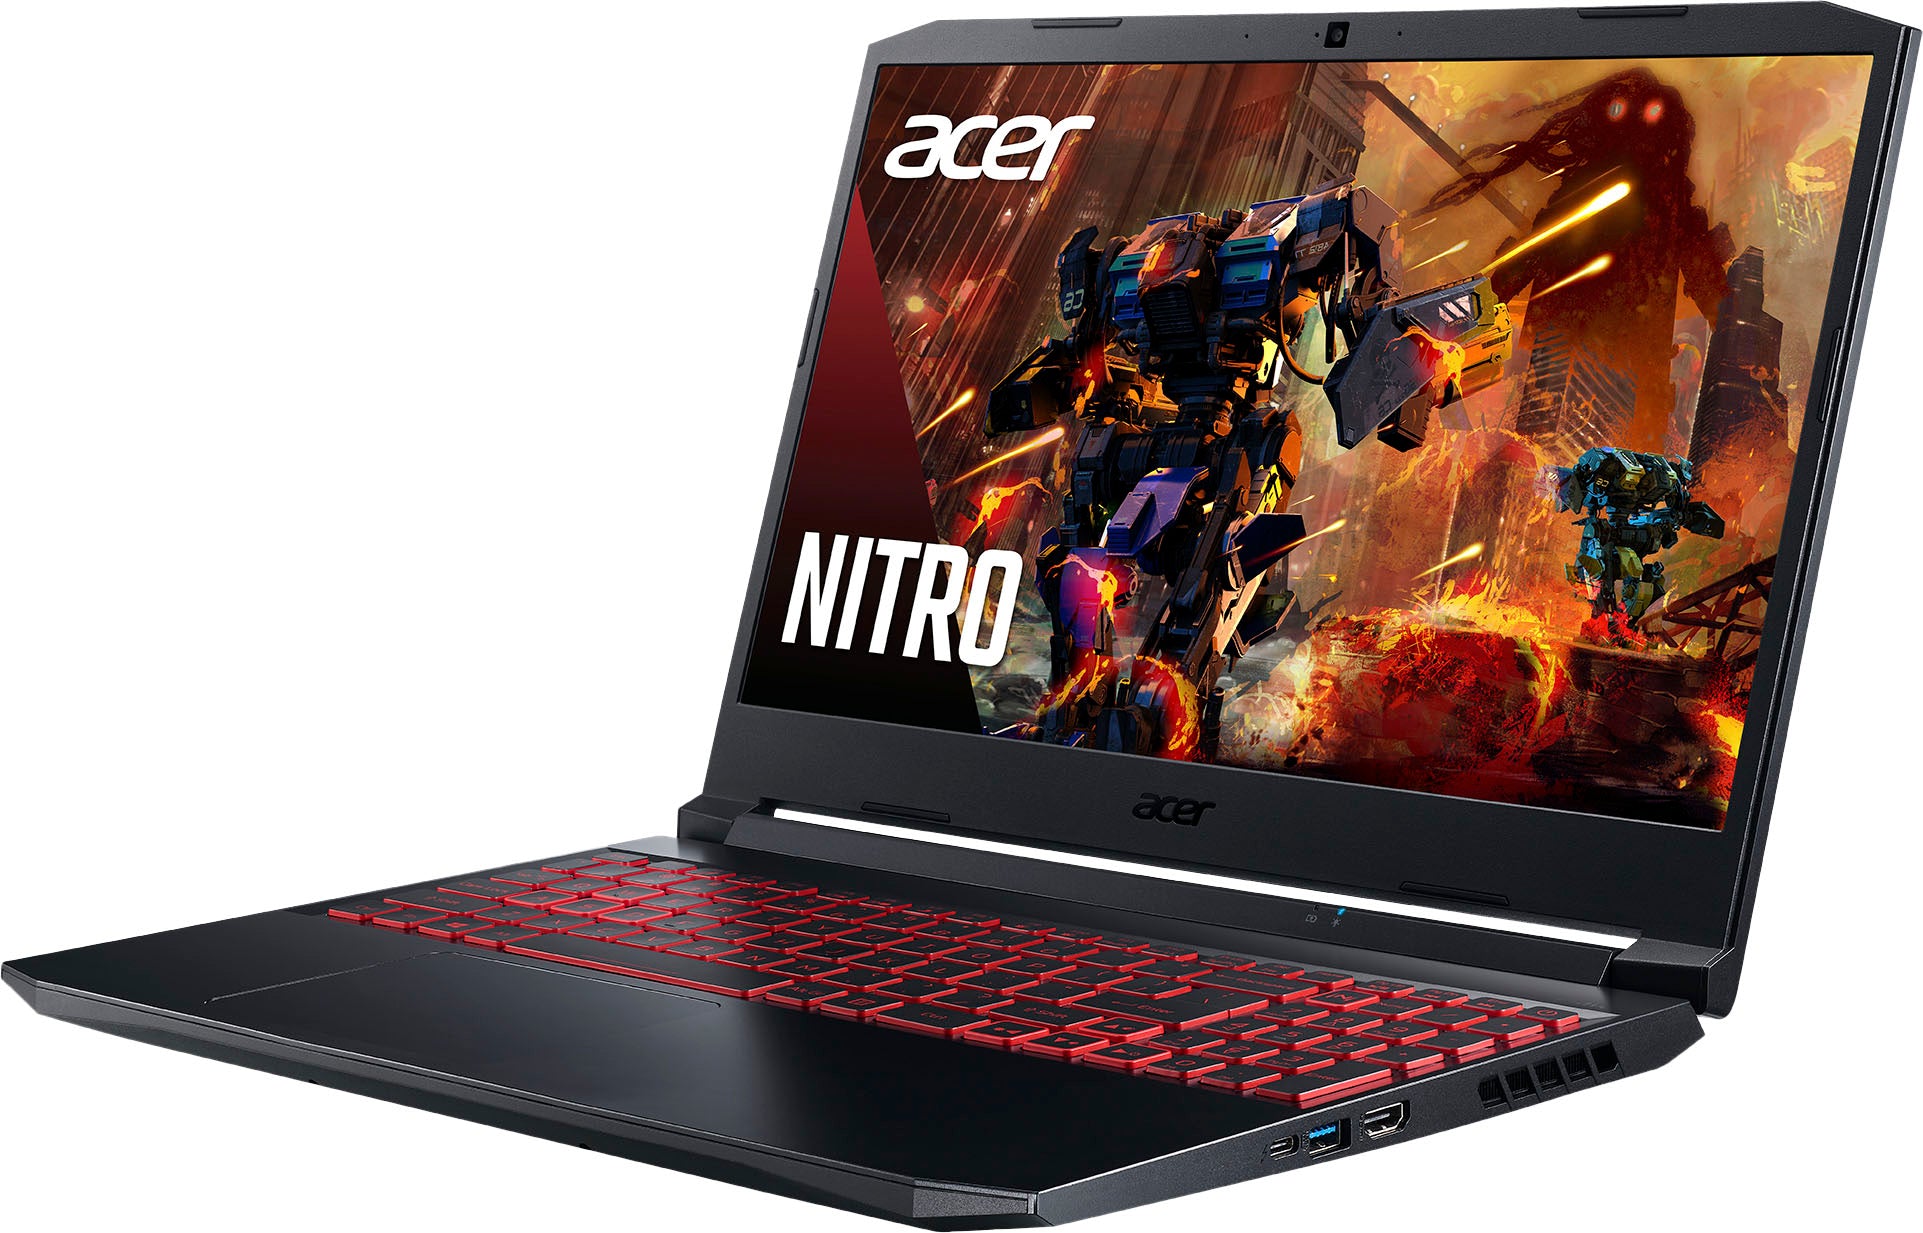 Acer - Nitro 5 - AN515-57-536Q - 15.6" FHD 144Hz IPS Gaming Laptop - Intel 11th Gen i5 - NVIDIA GeForce GTX 1650 - 8GB DDR4 - 256GB SSD - Black